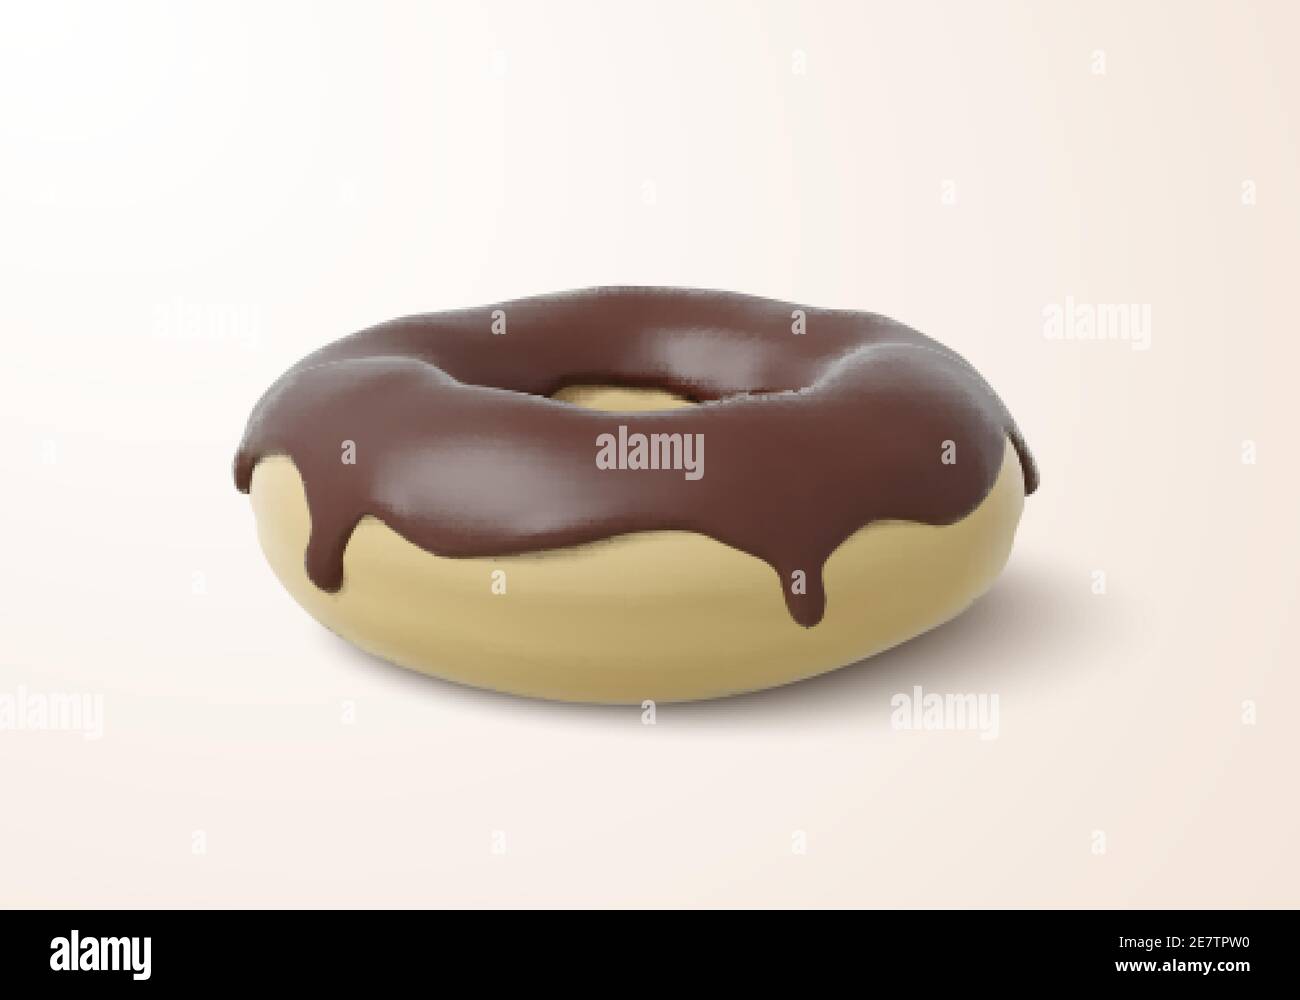 Süßer Donut mit Schokoladencreme darauf. Bäckerei oder Café Menü Dekoration Element Vektor Illustration Stock Vektor